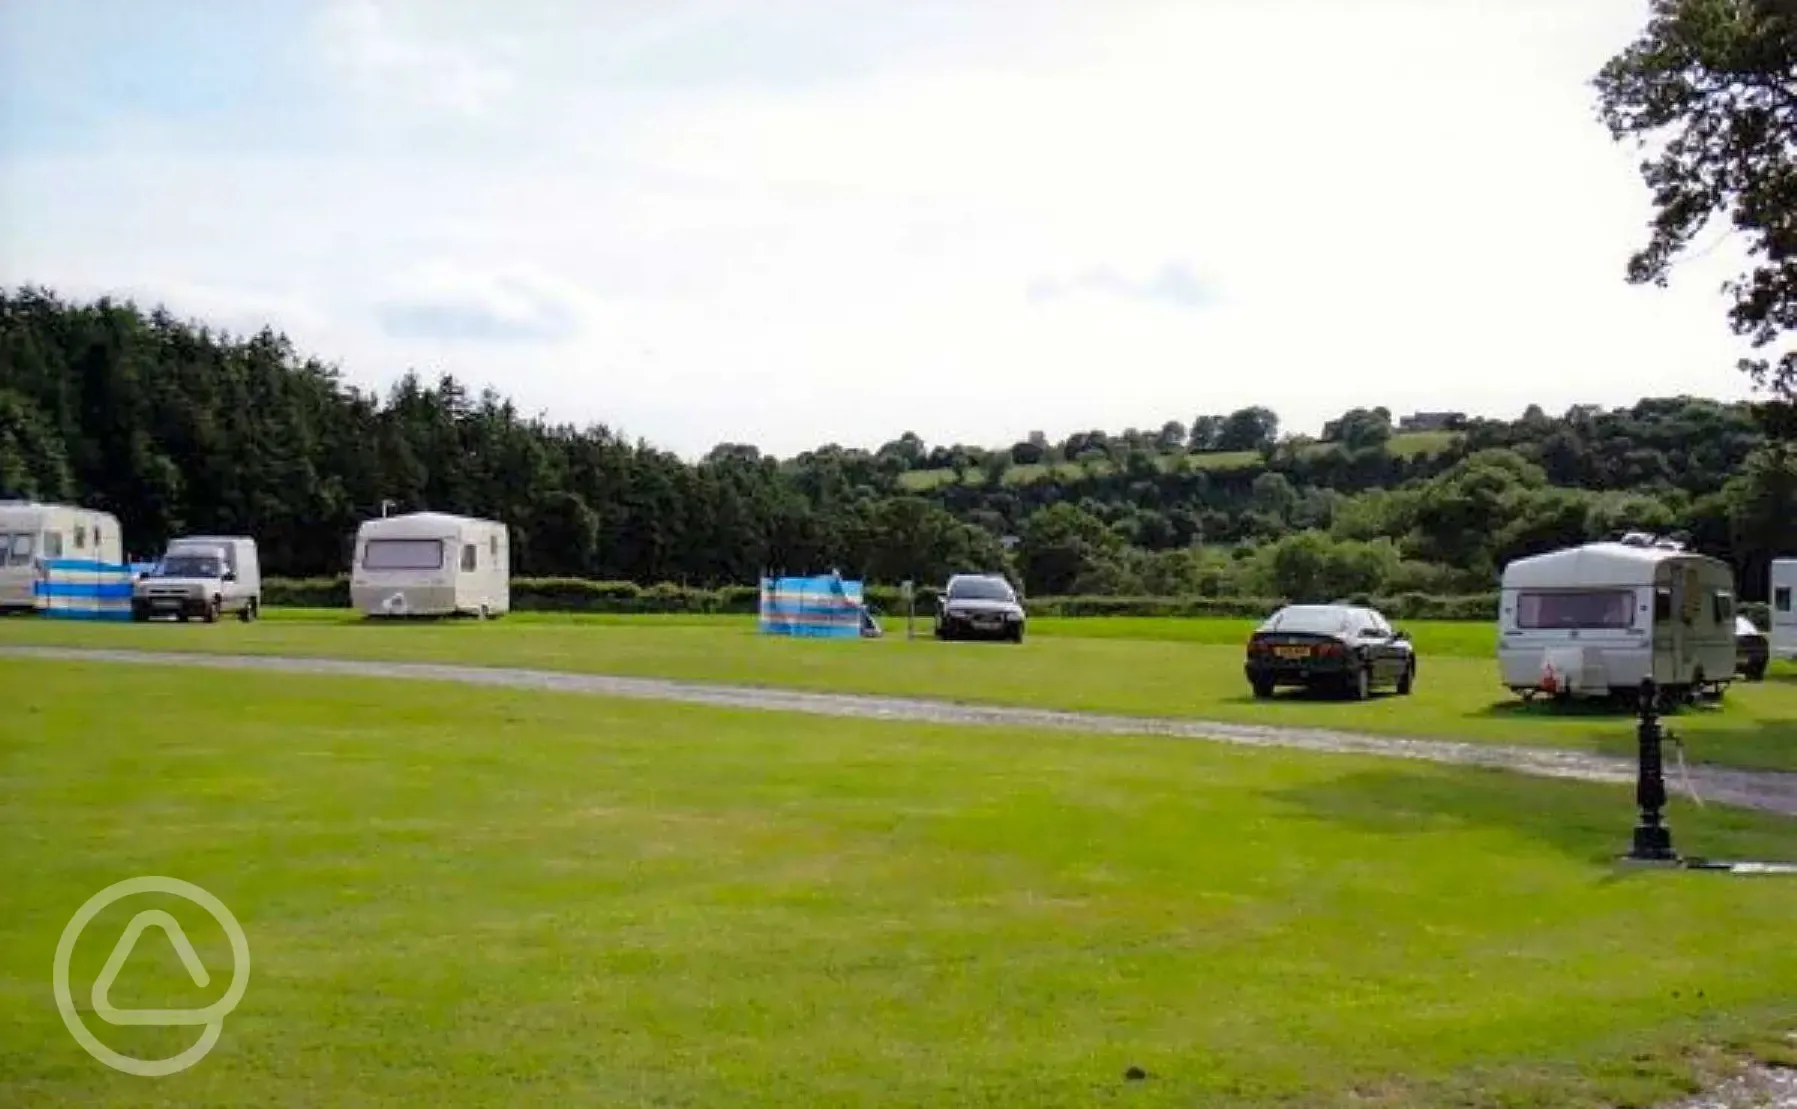 Argoed Meadow Camping and Caravan Site